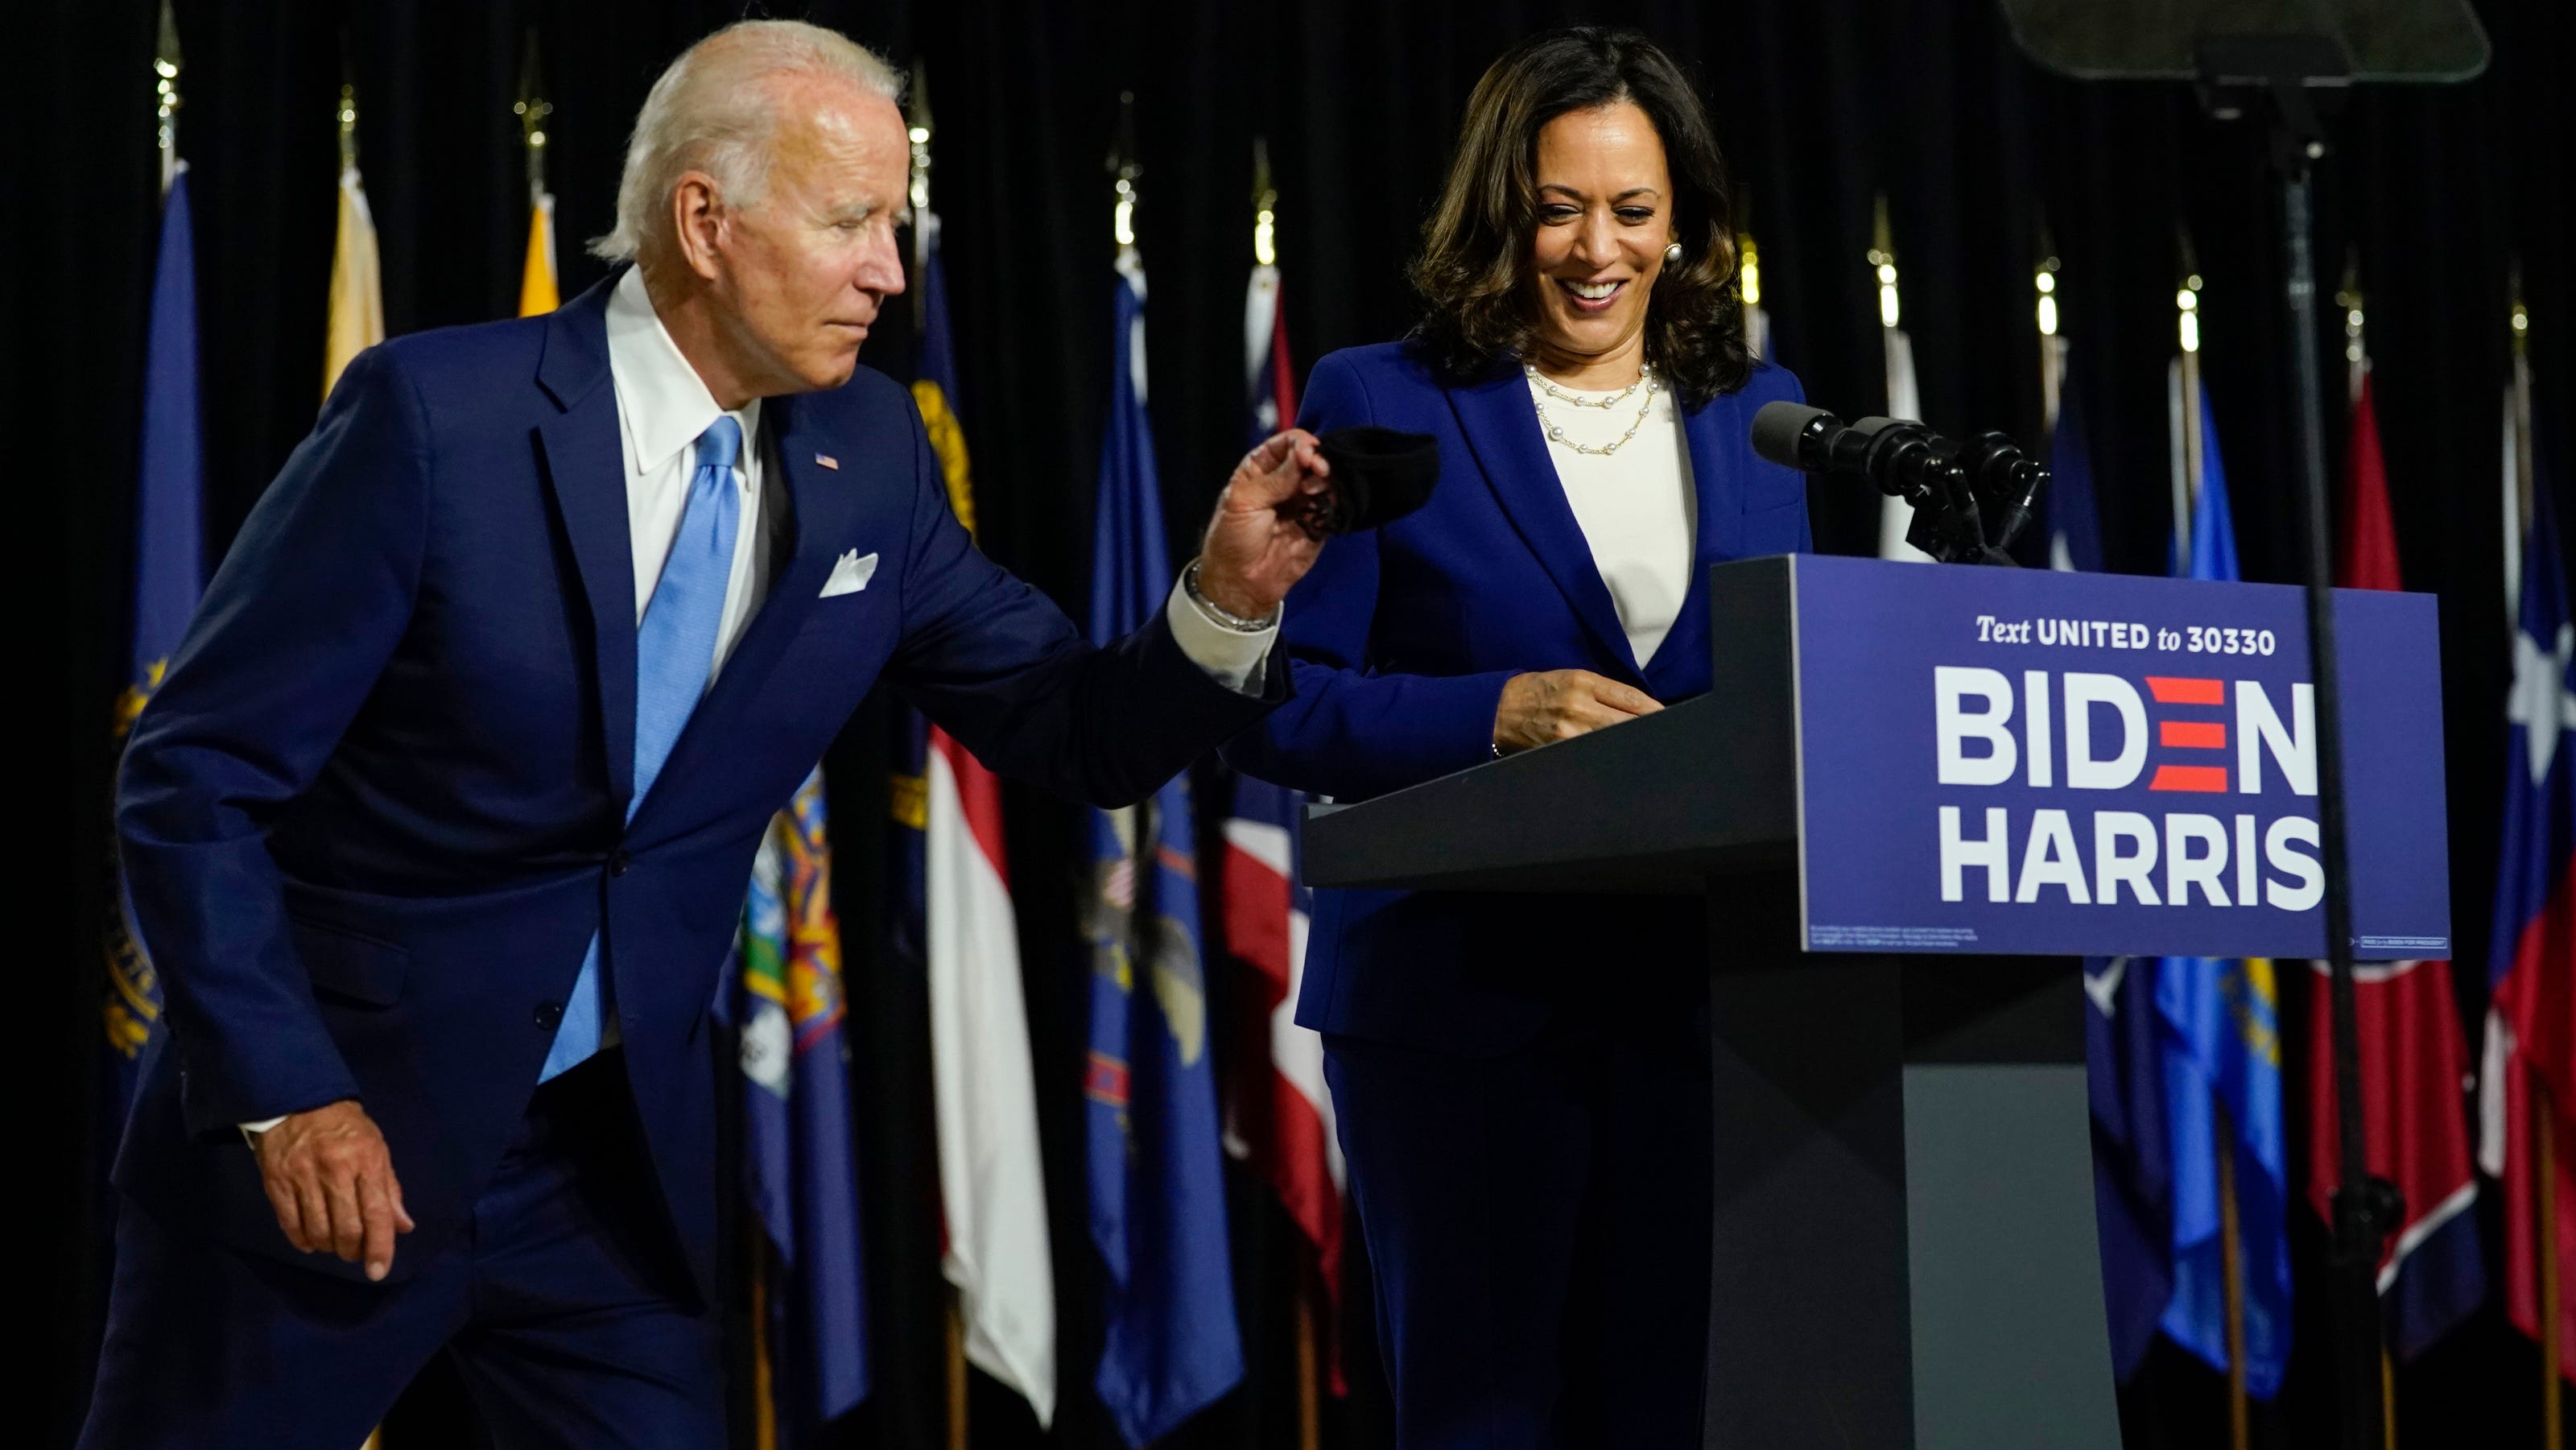 Joe Biden, Kamala Harris make first appearance as Democratic ticket